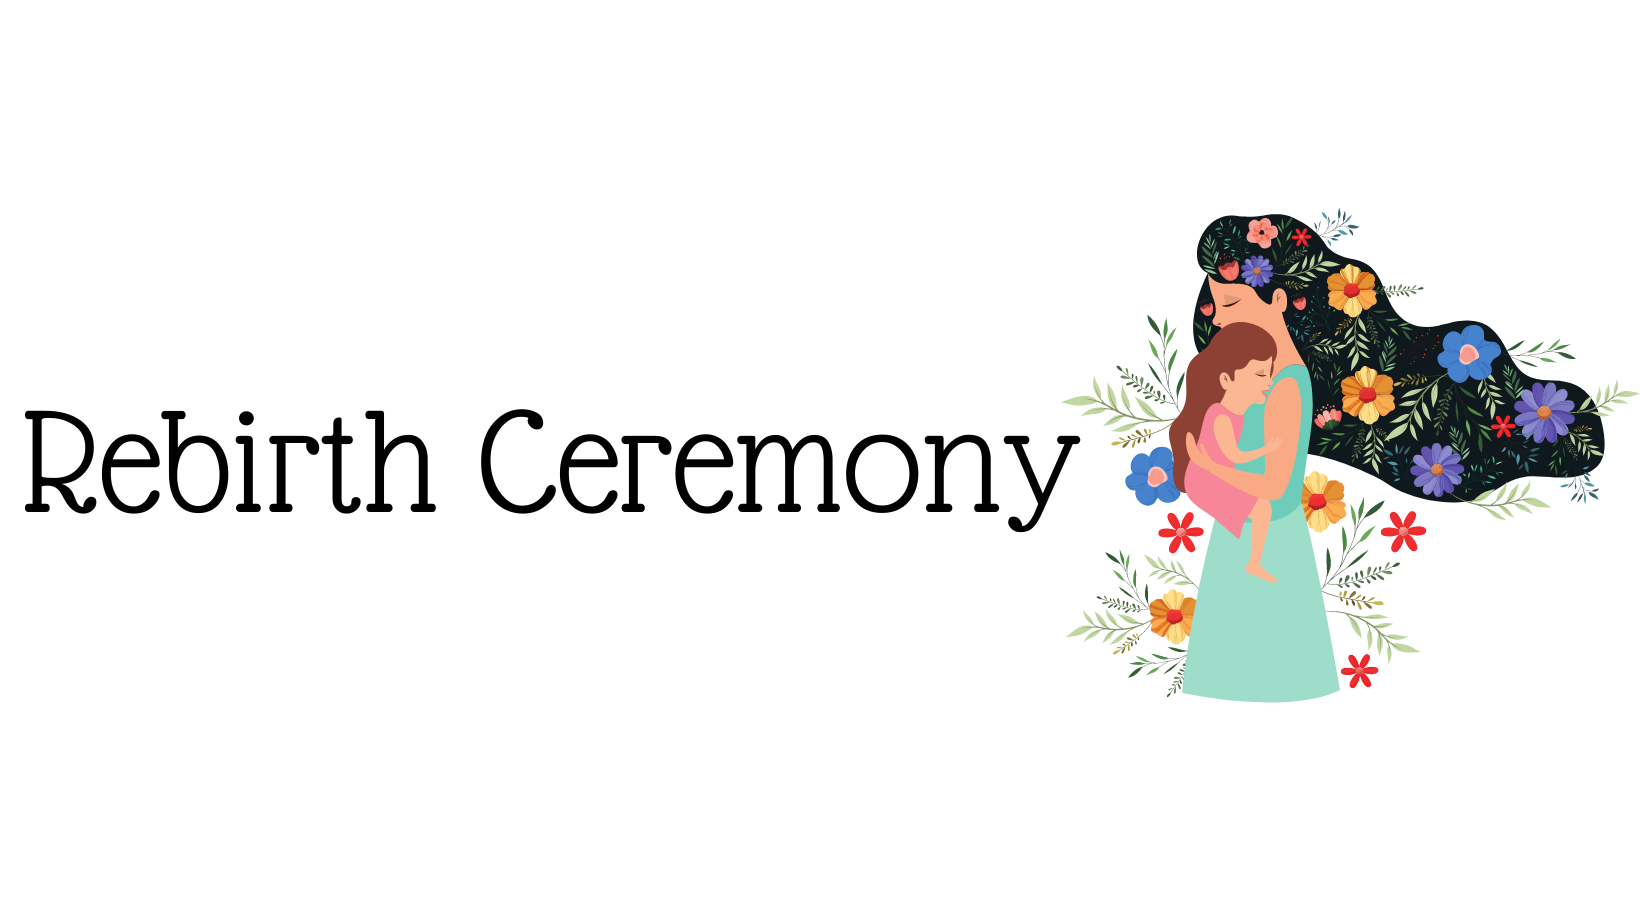 Rebirth Ceremony